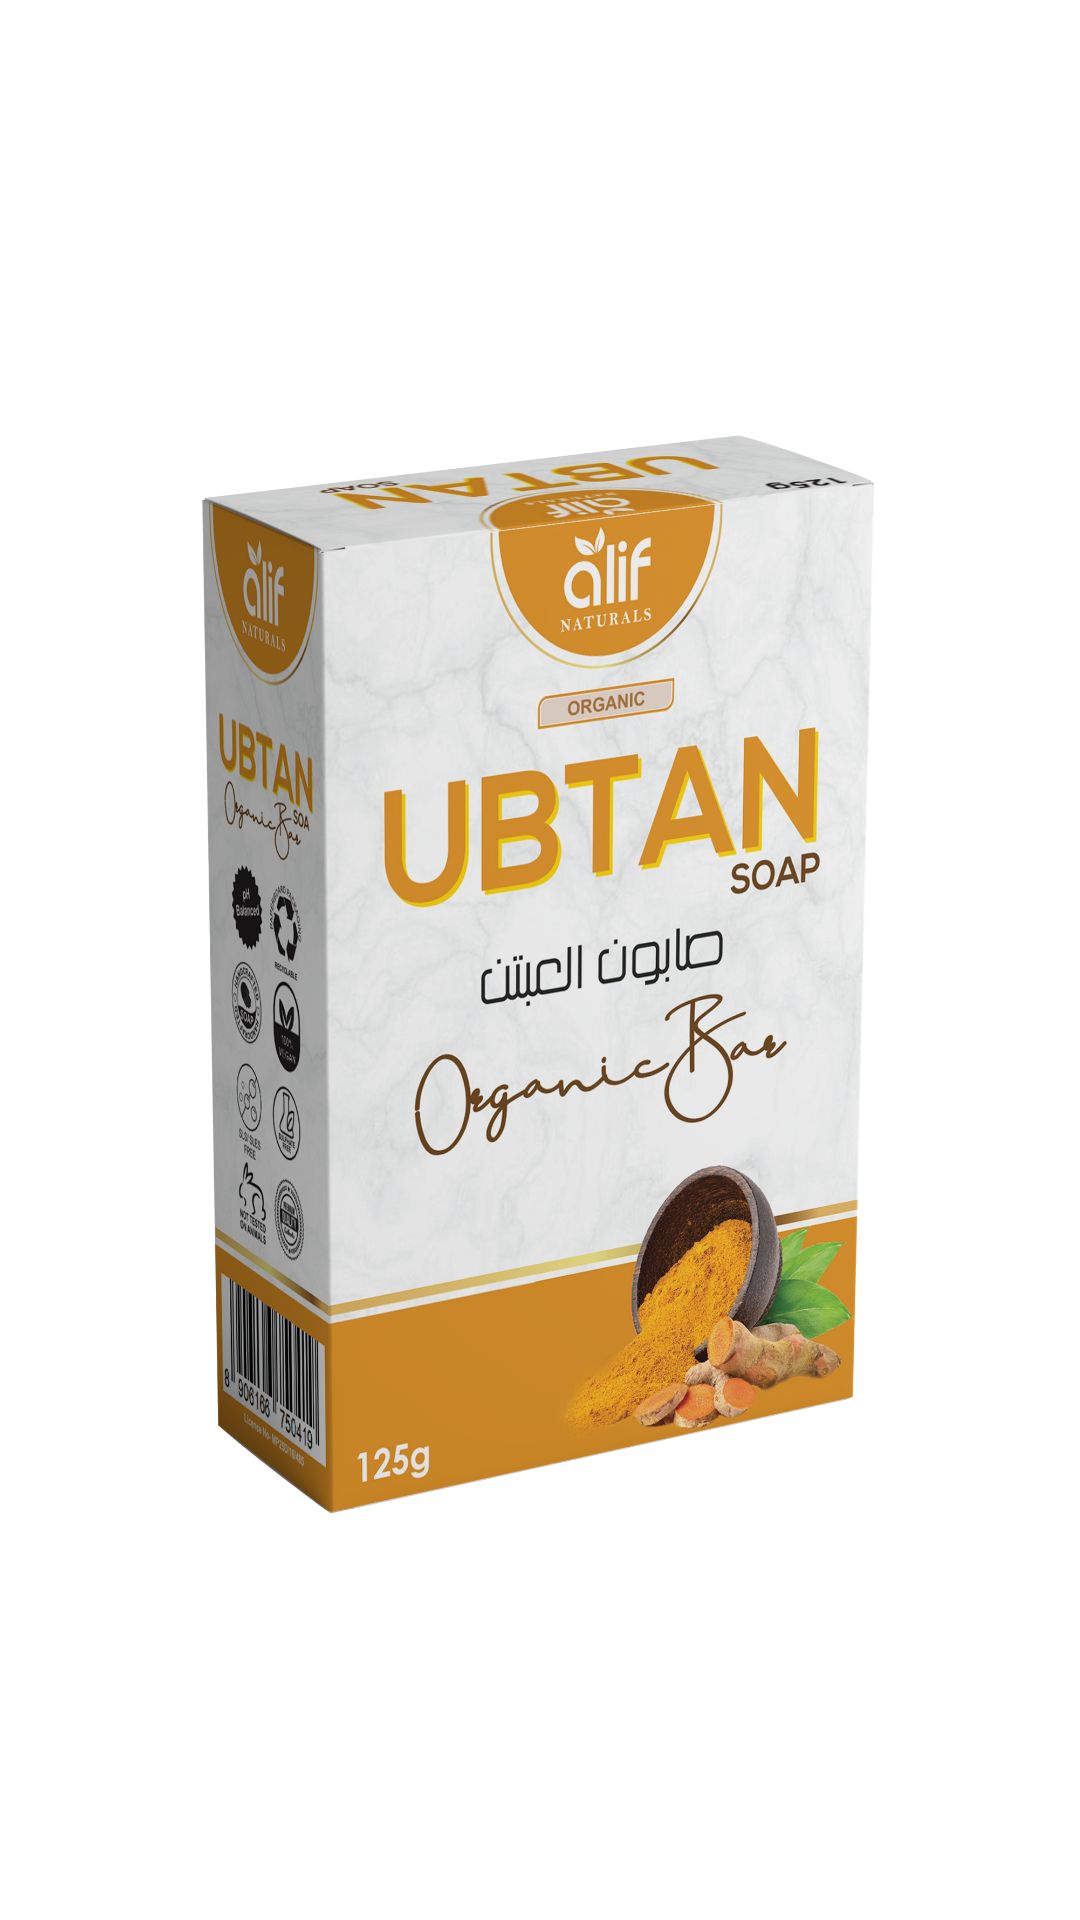 Organic Ubtan Soap